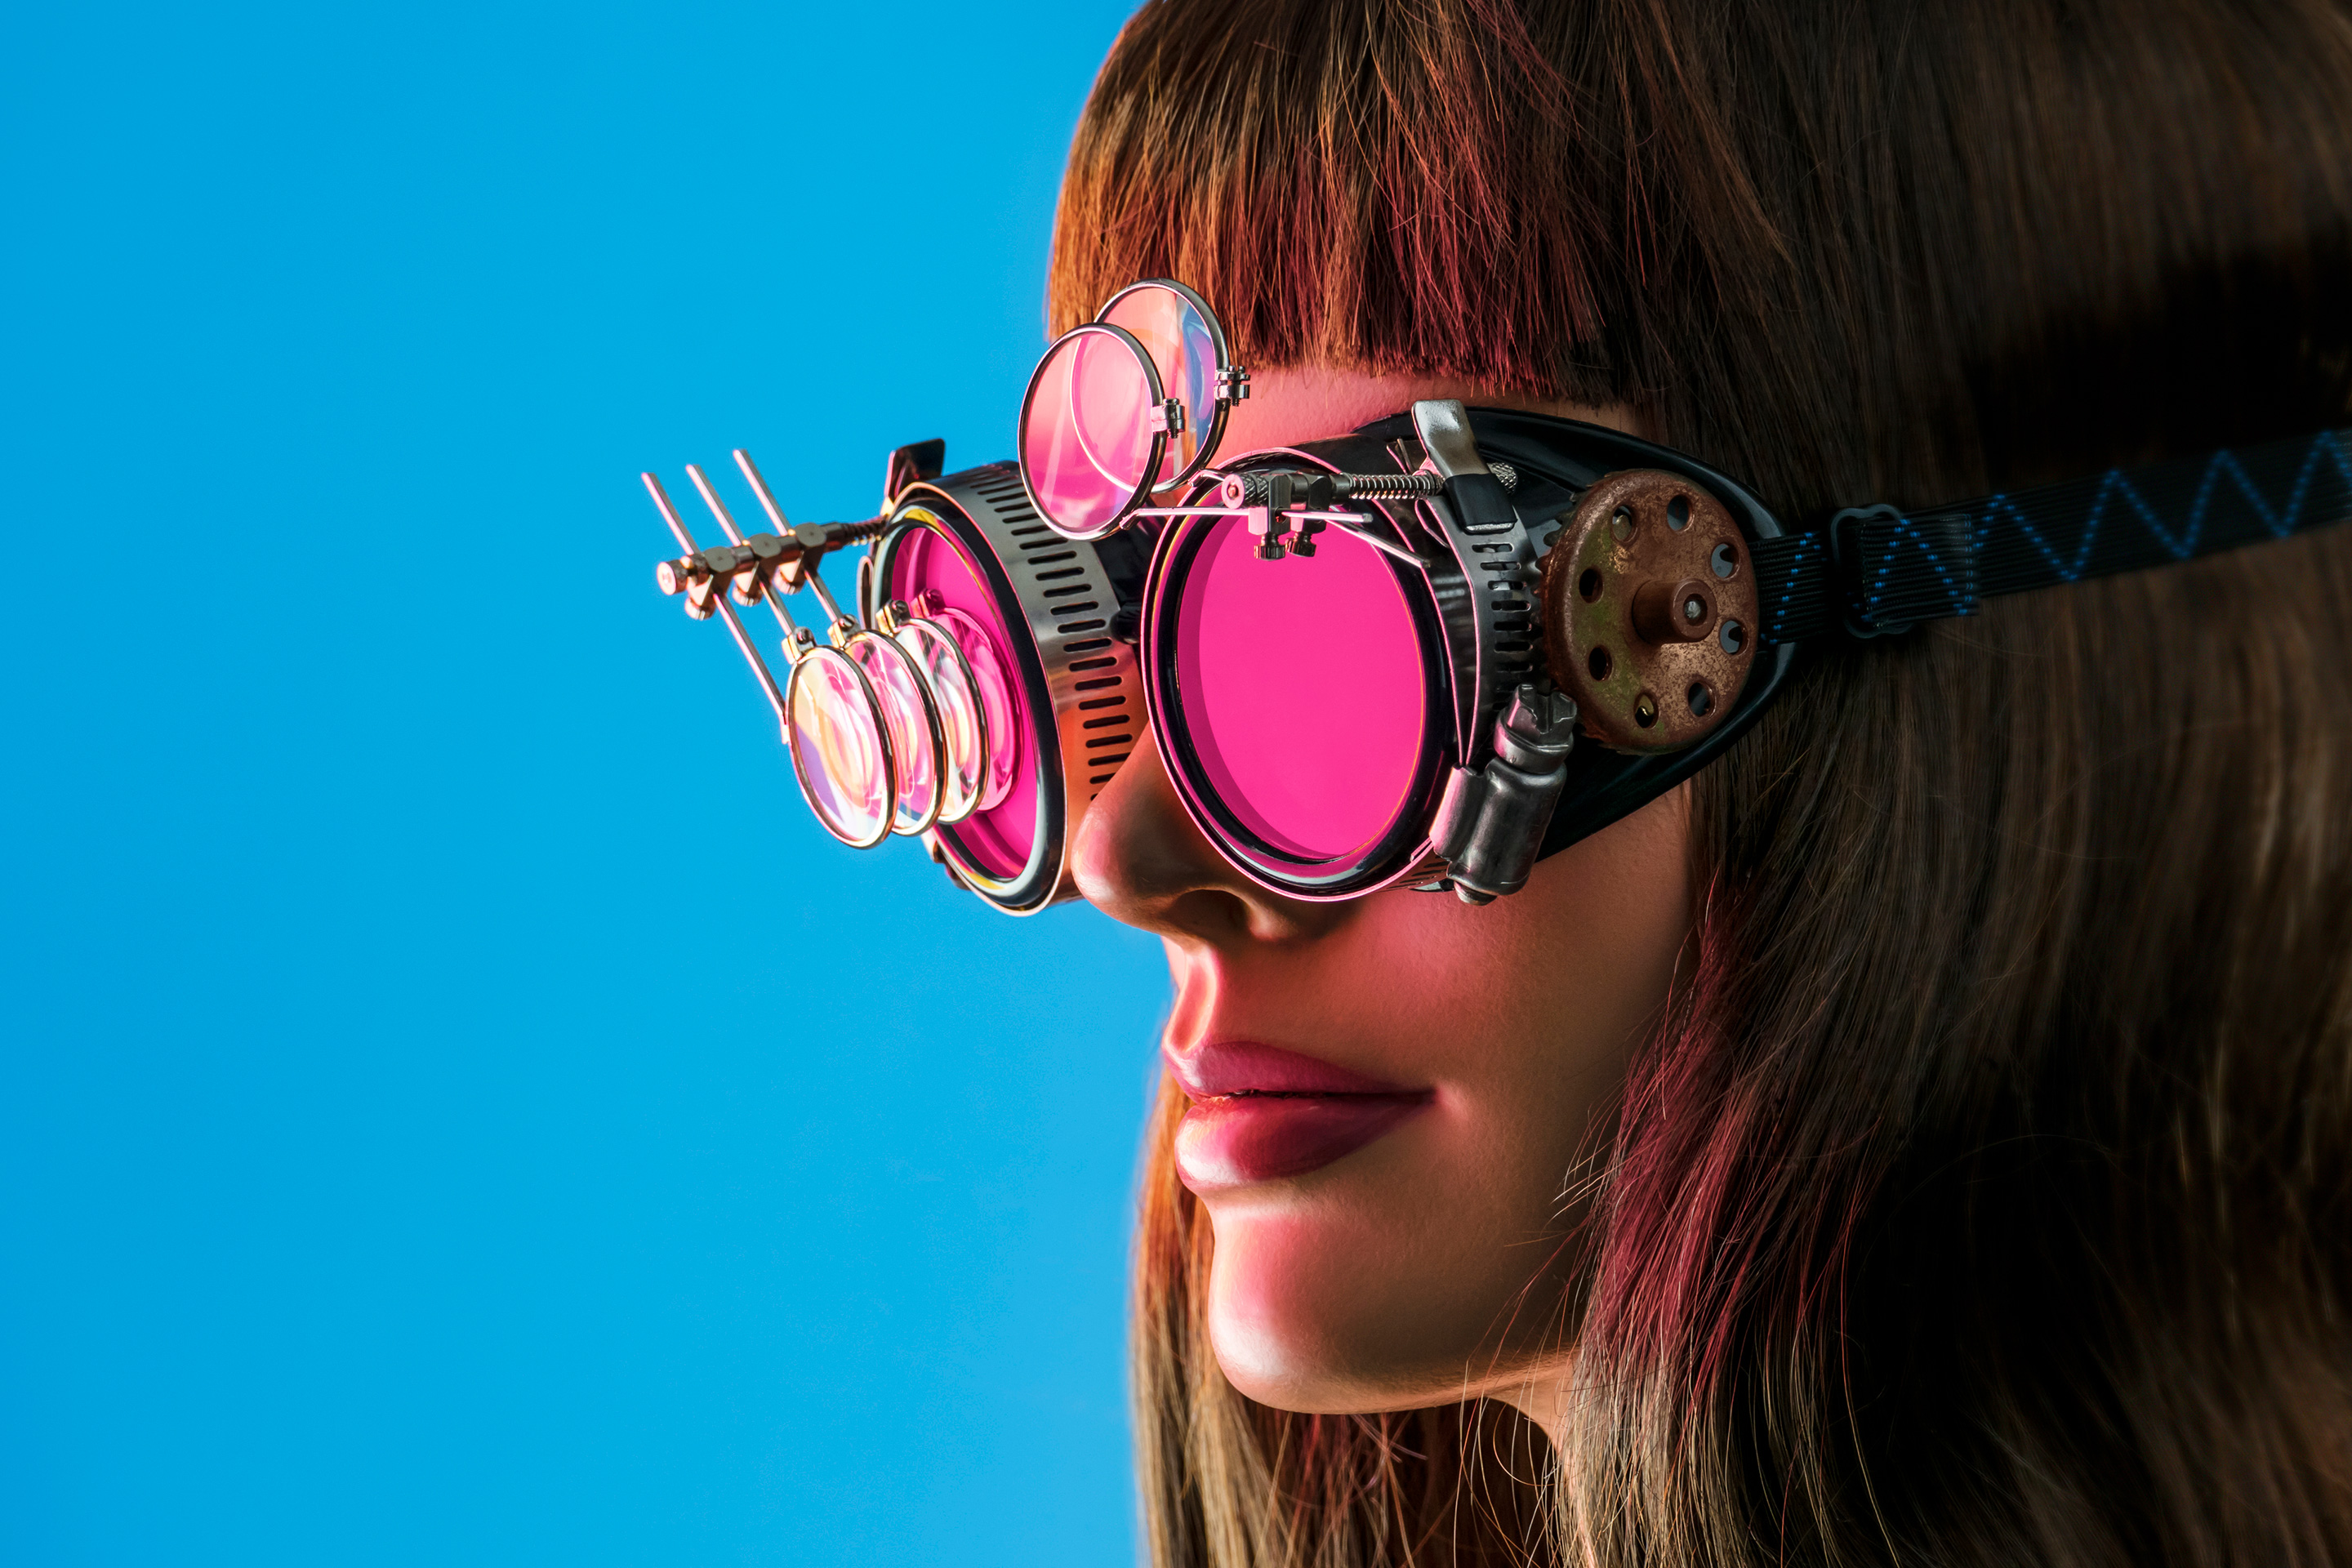 Futuristic woman with glasses